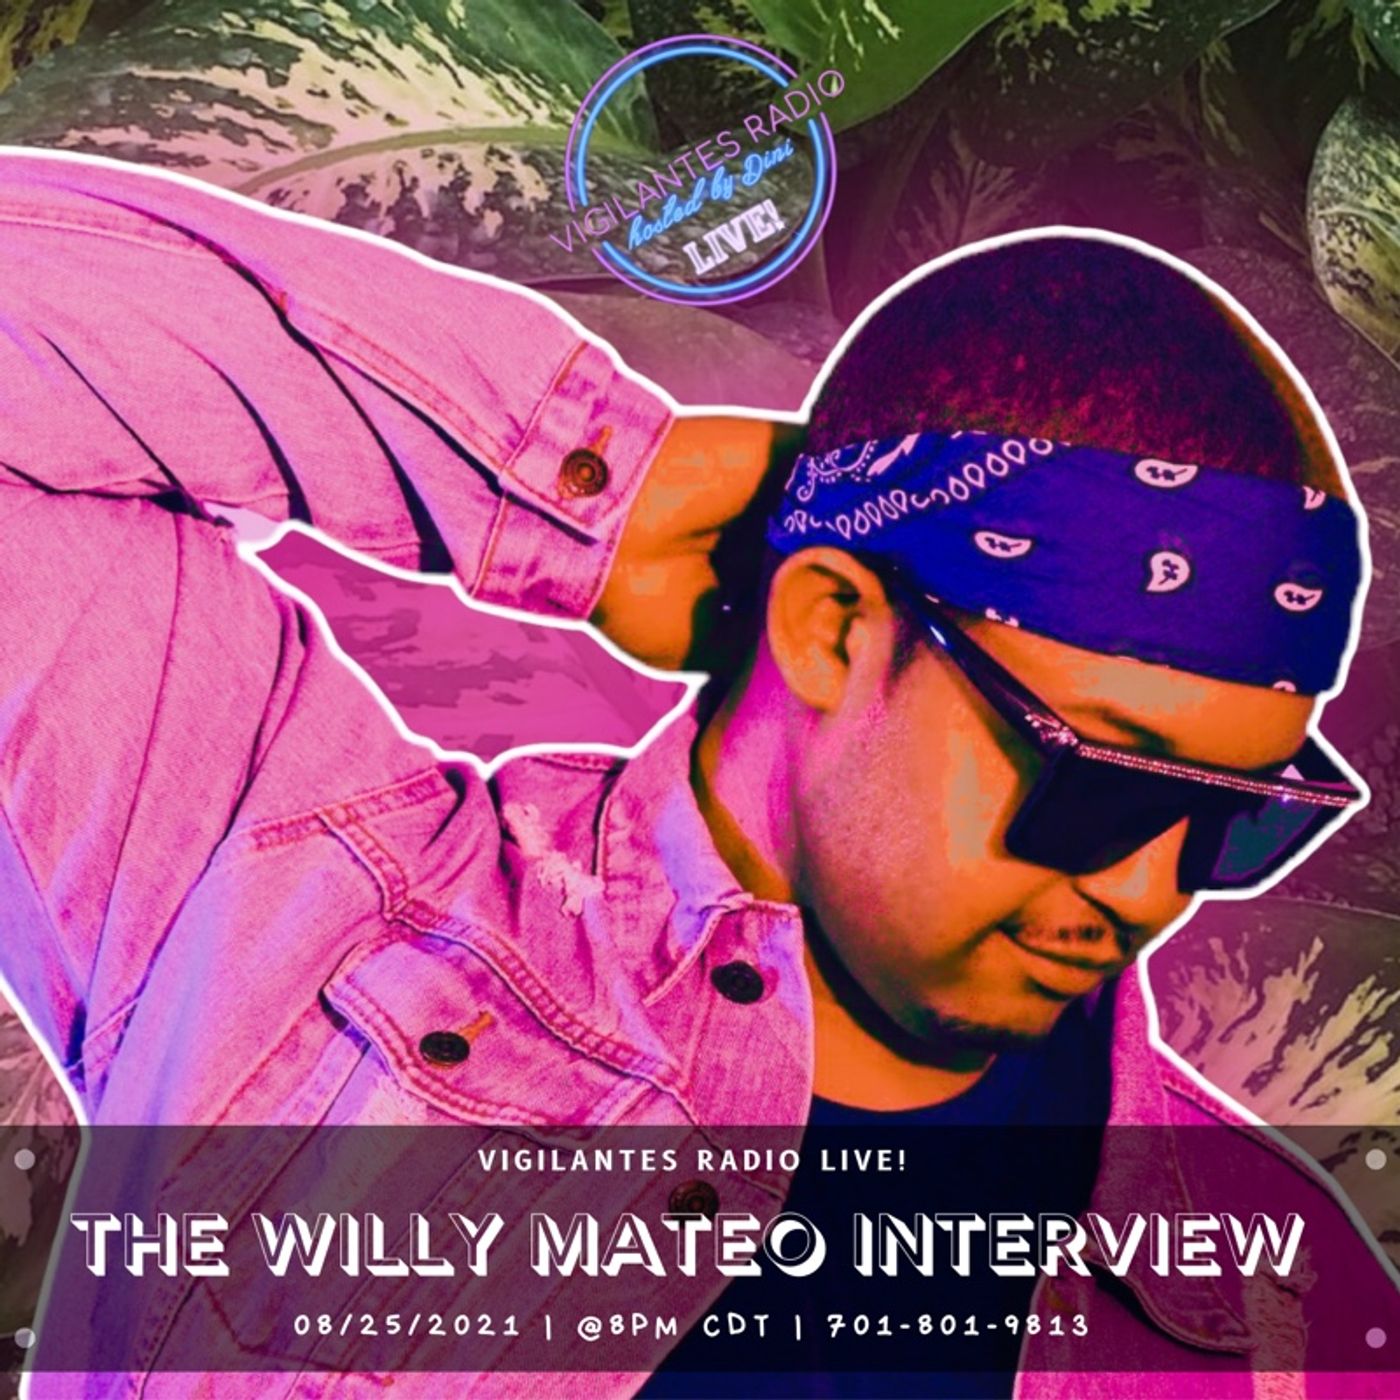 The Willie Mateo Interview.